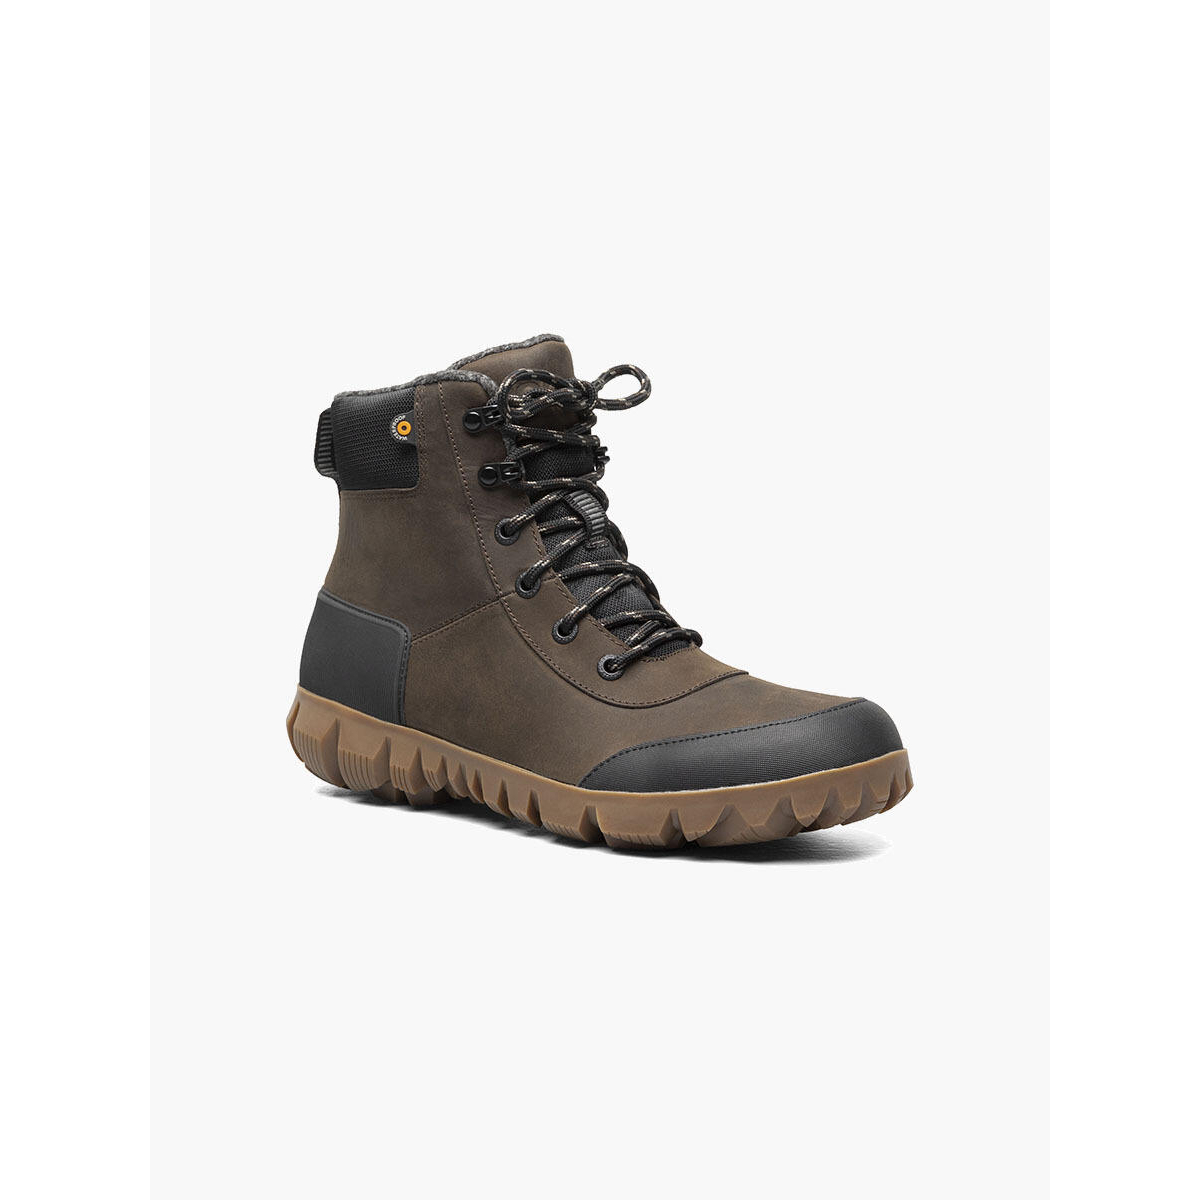 BOGS Men's Arcata Urban Leather Mid Winter Boots Chocolate - 72909-202 CHOCOLATE - CHOCOLATE, 9